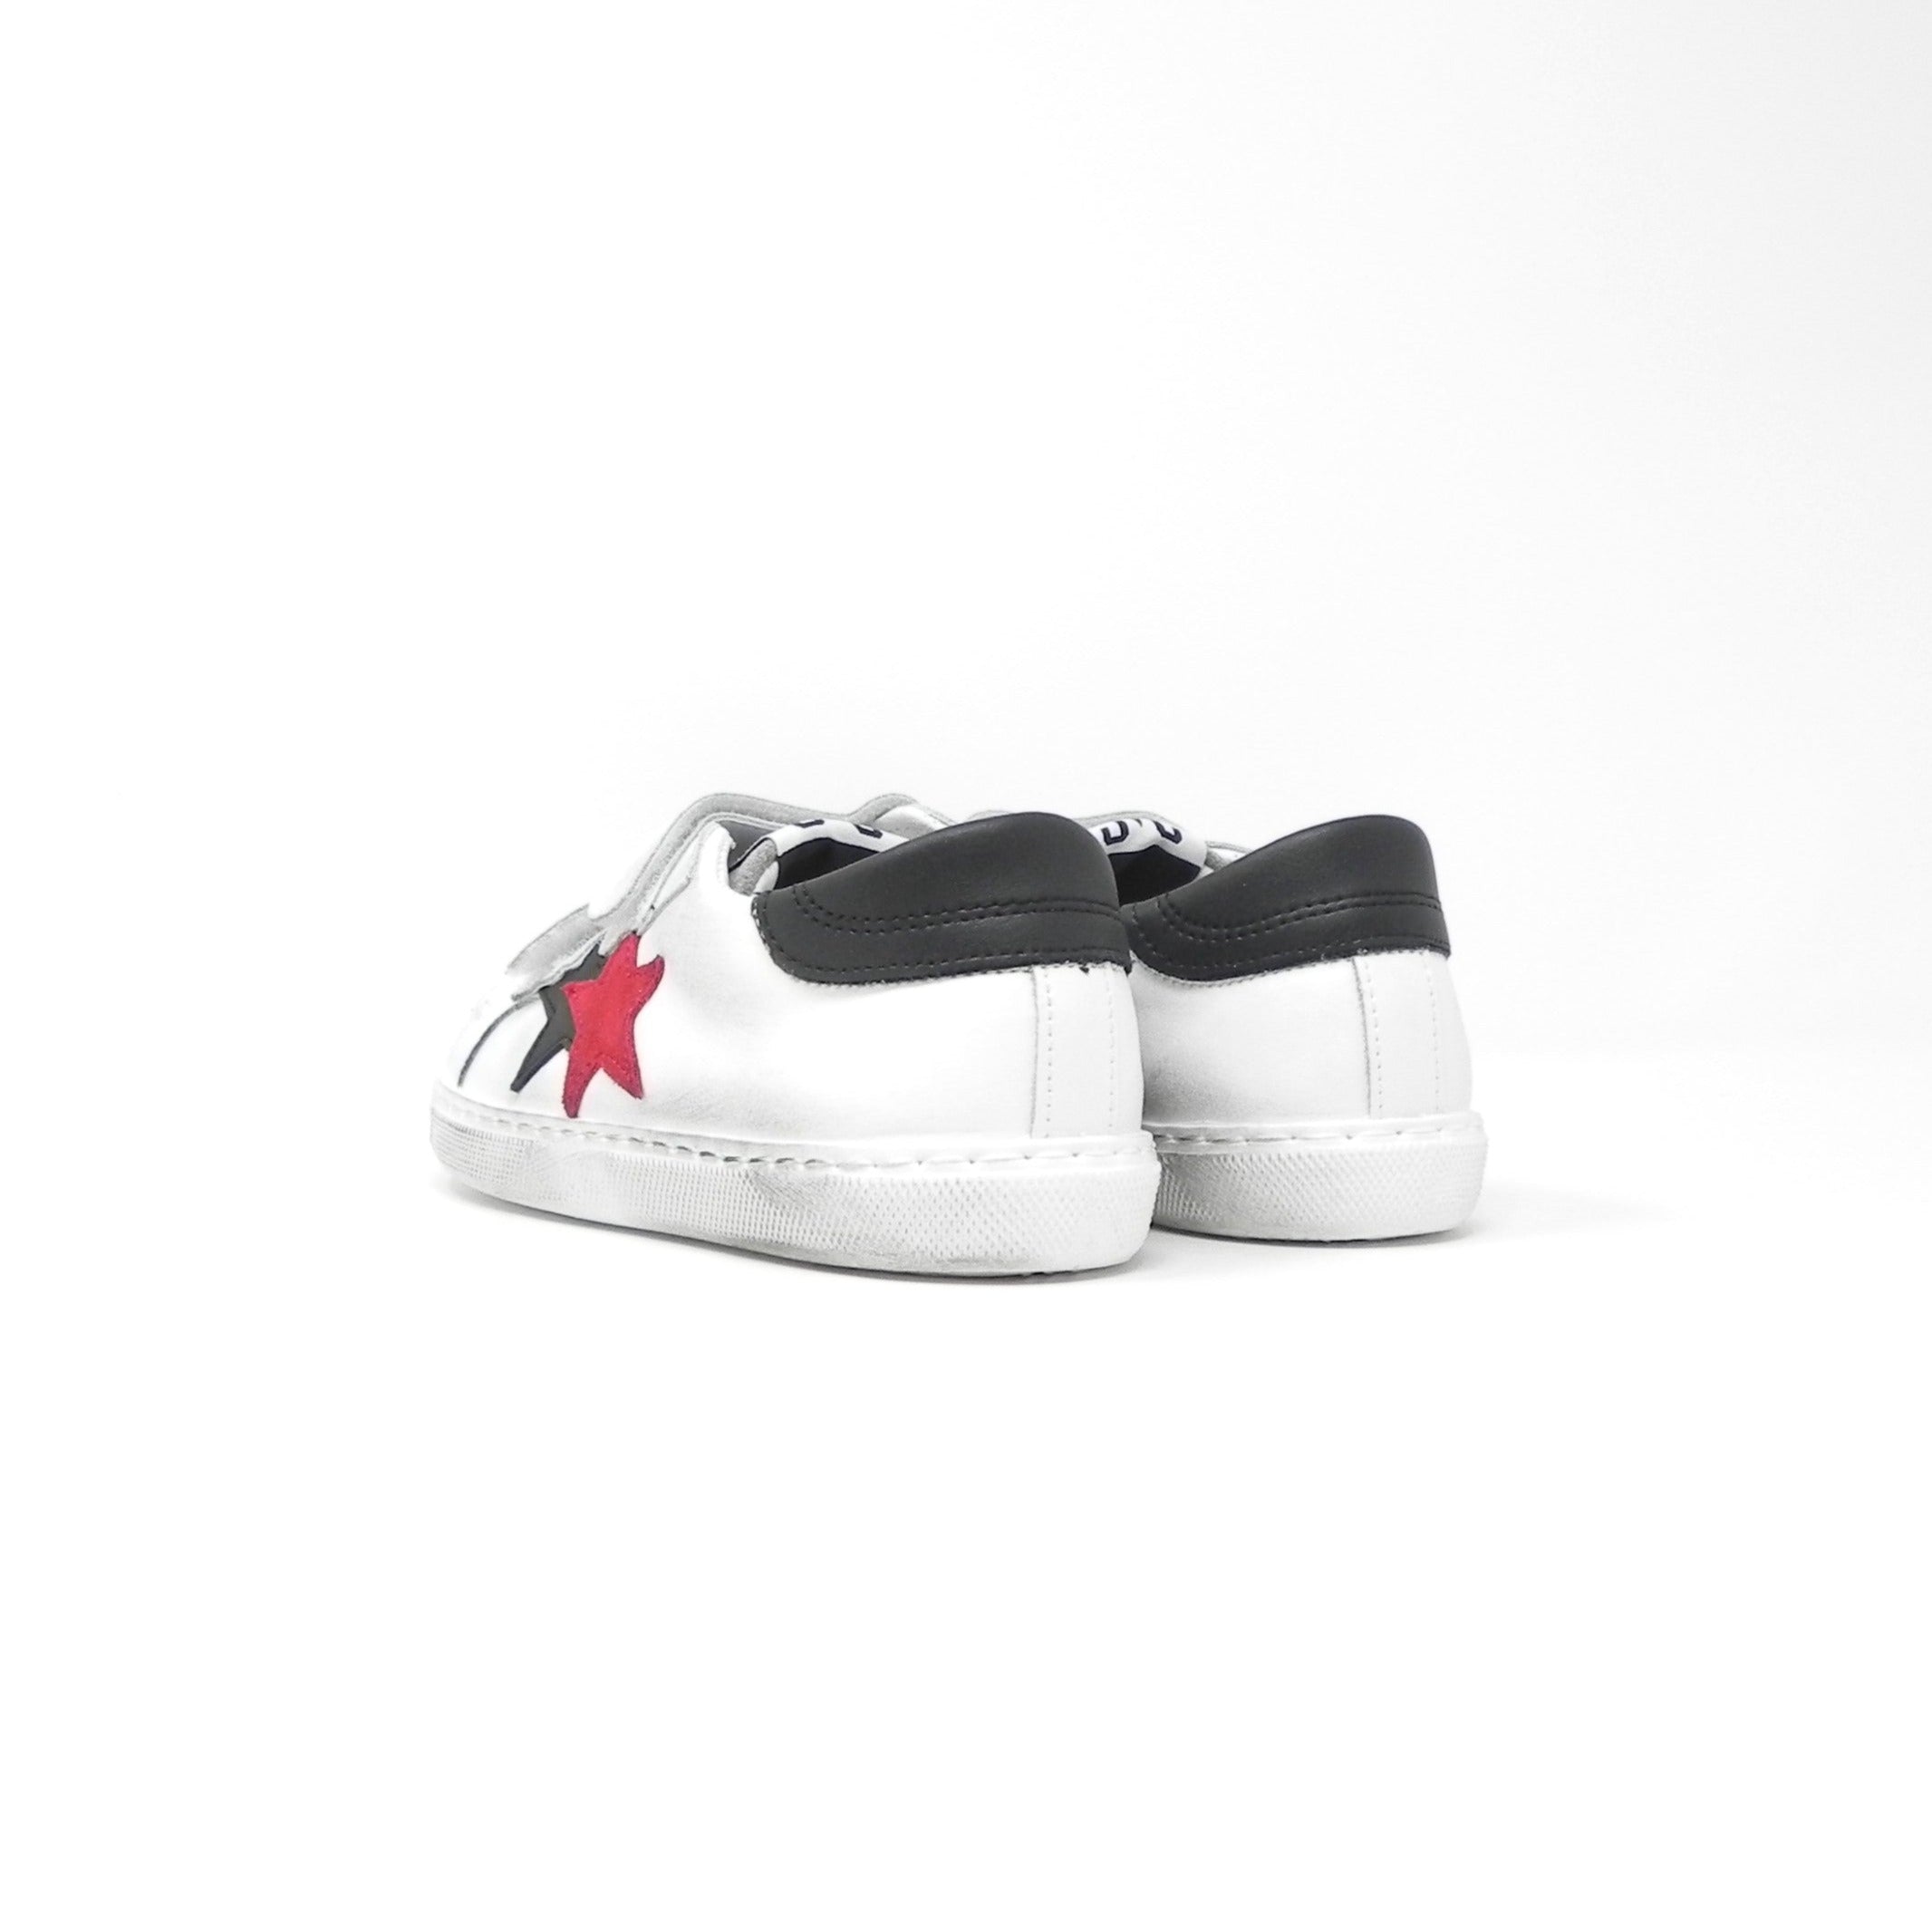 2STAR - Sneakers